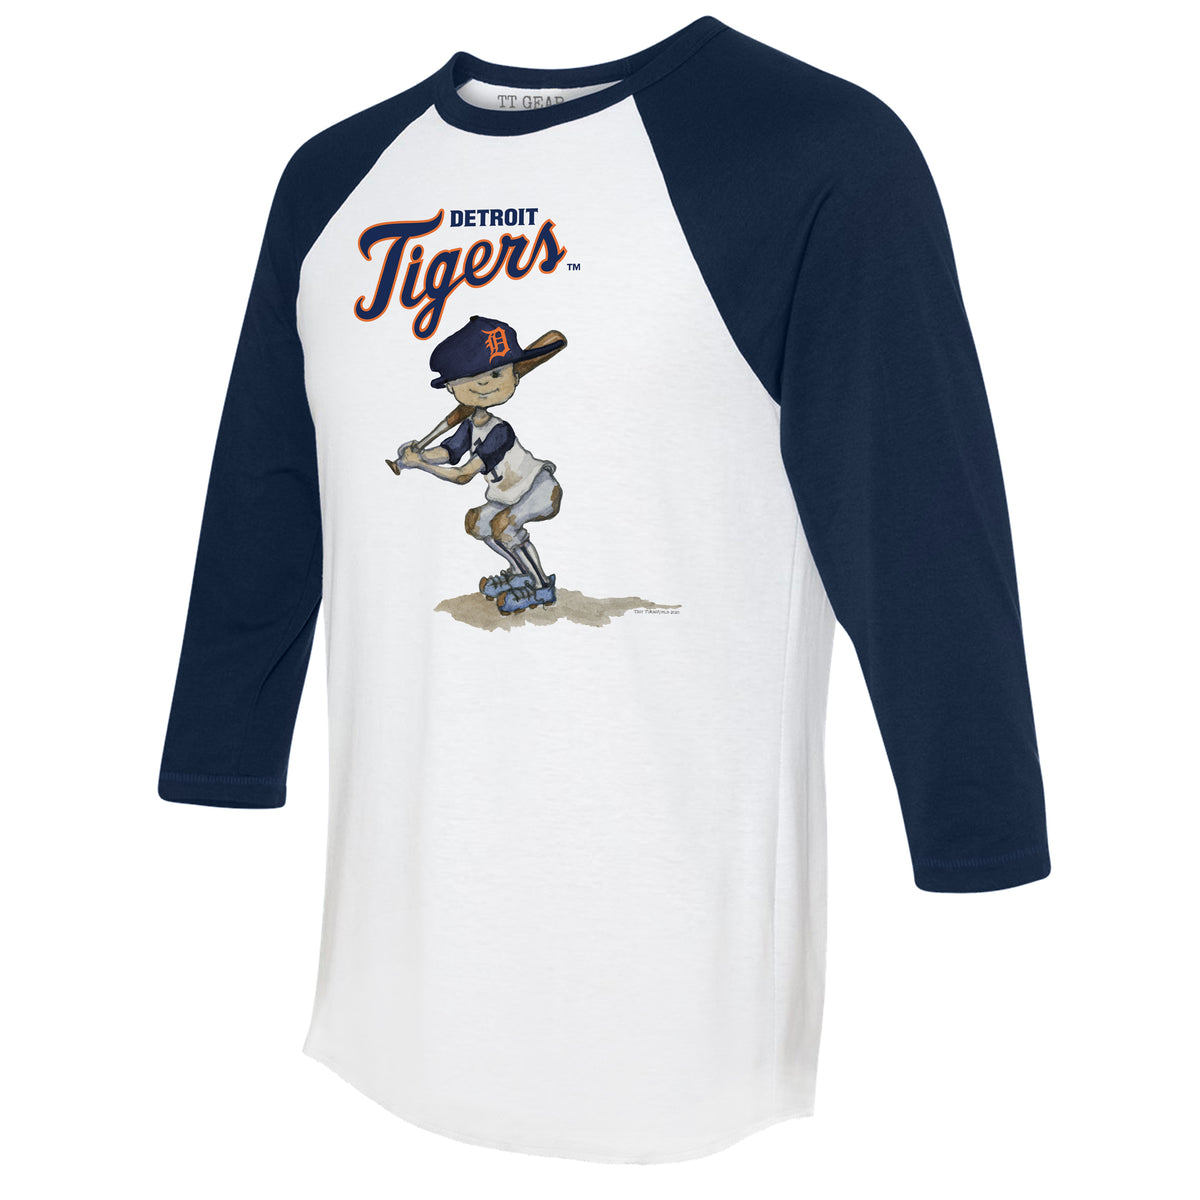 Tiny Turnip Detroit Tigers Baseball Heart Banner Fringe Tee Youth Large (10-12) / Navy Blue